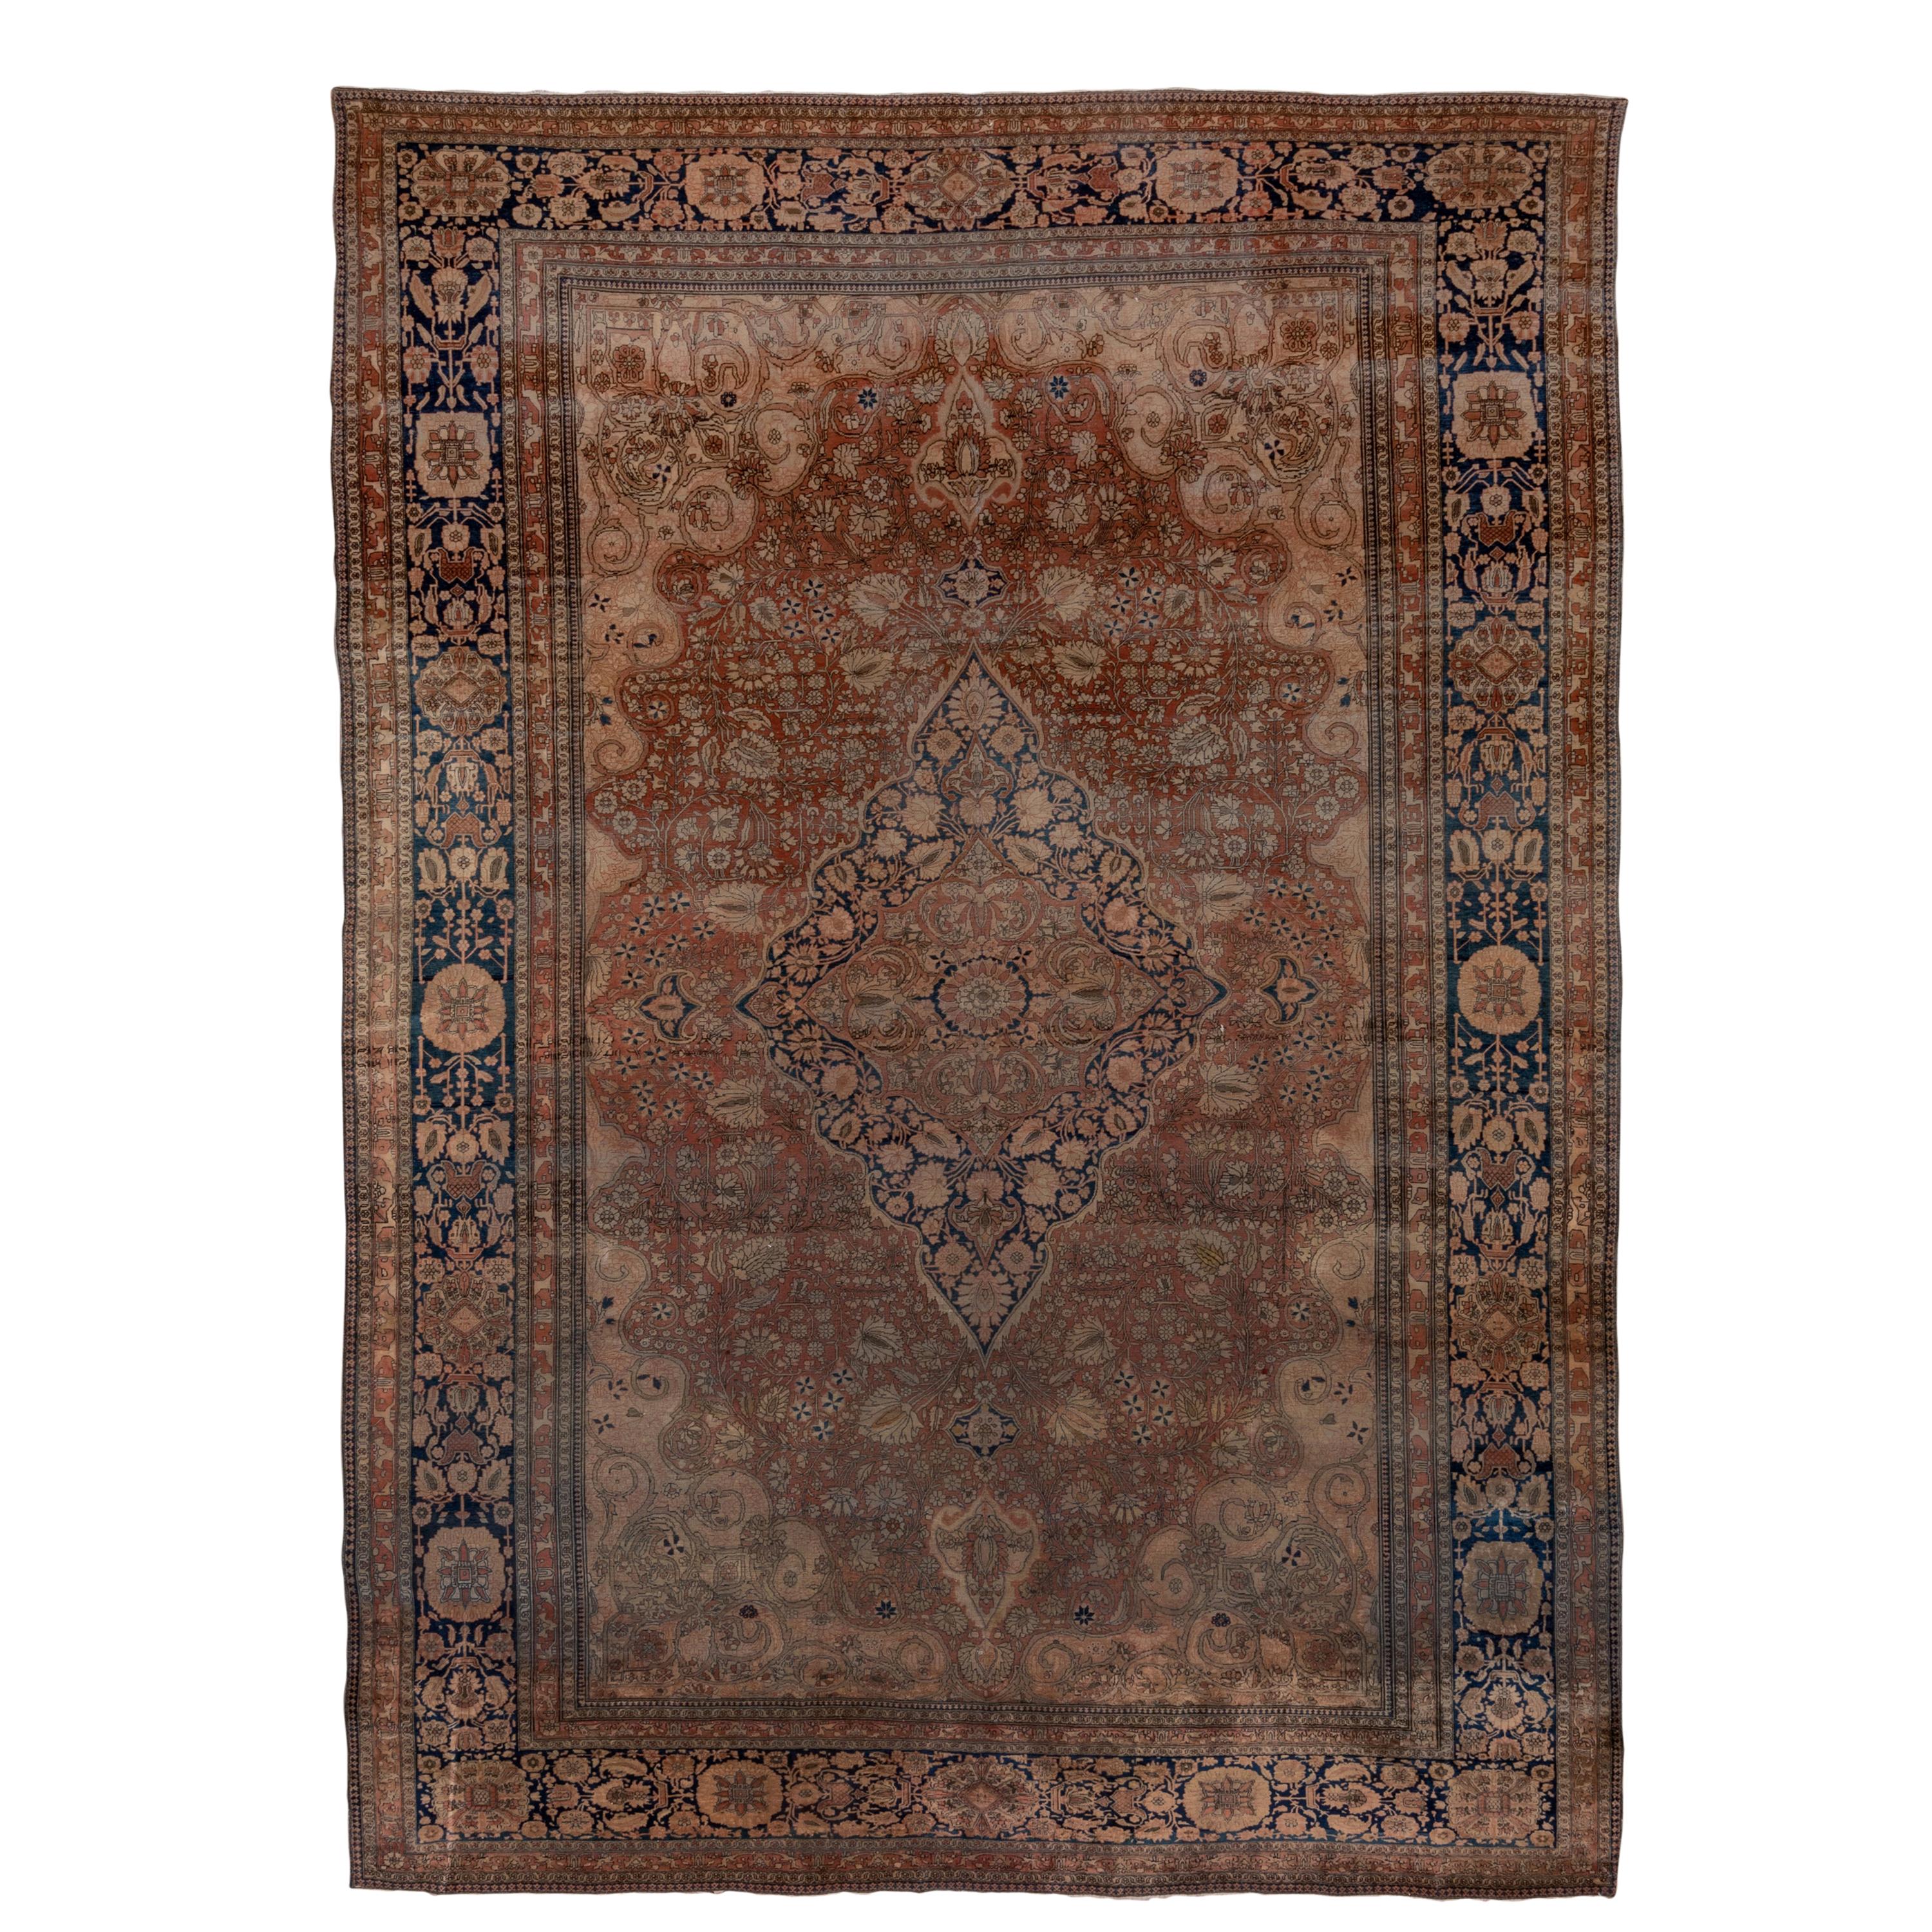 Antique Persian Kashan Carpet, Rust Field, Center Medallion, Blue Borders For Sale